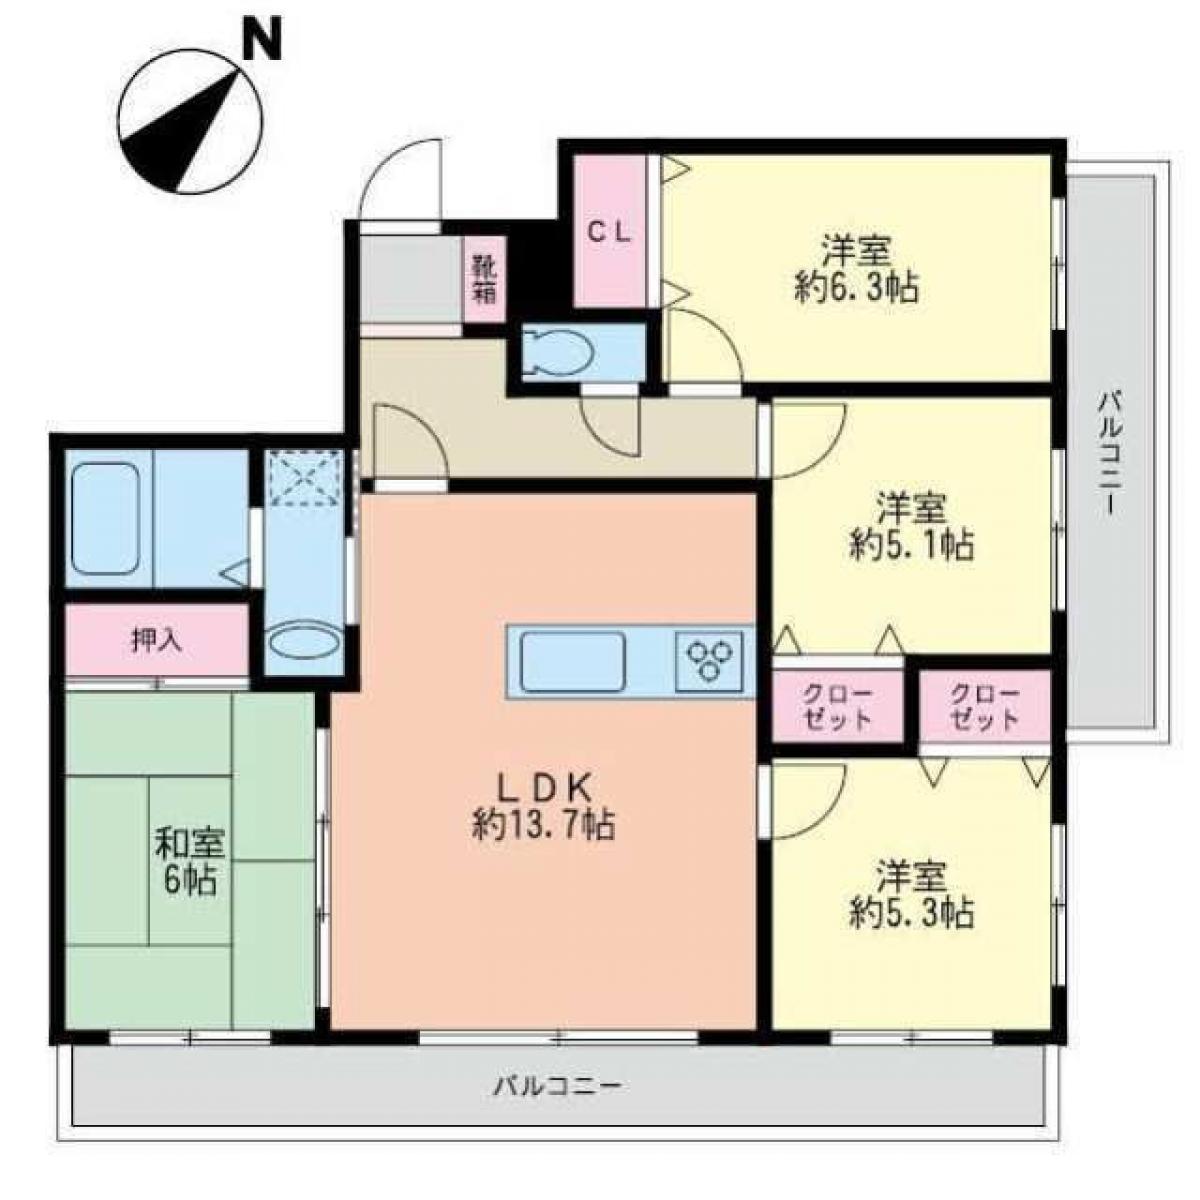 Picture of Apartment For Sale in Omuta Shi, Fukuoka, Japan